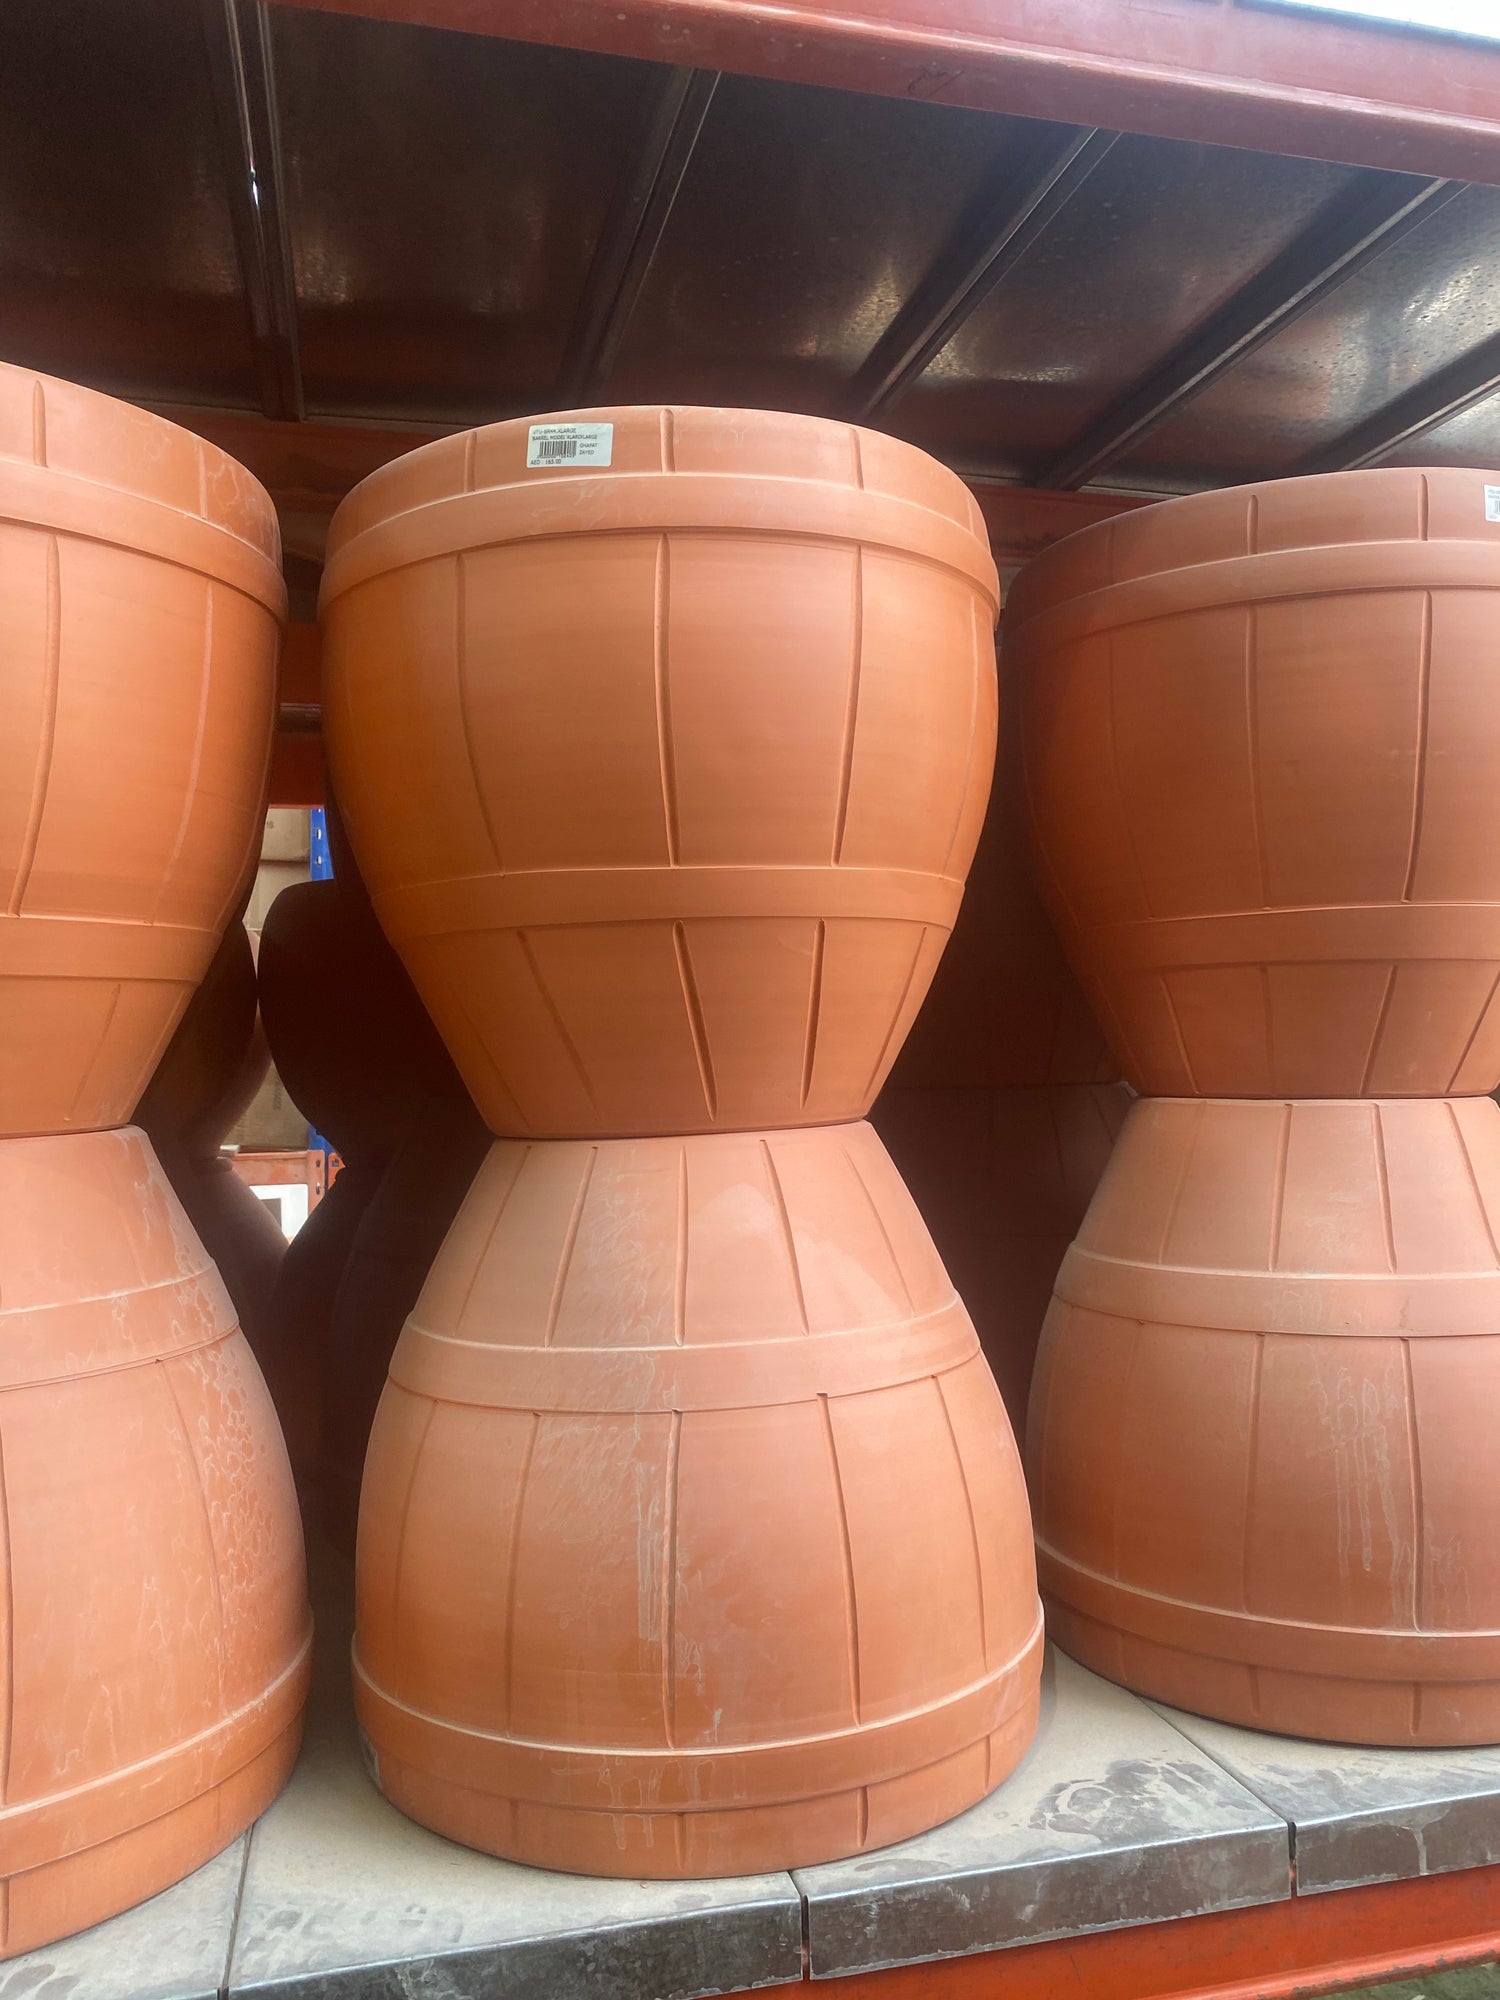 terracotta pots (S45)